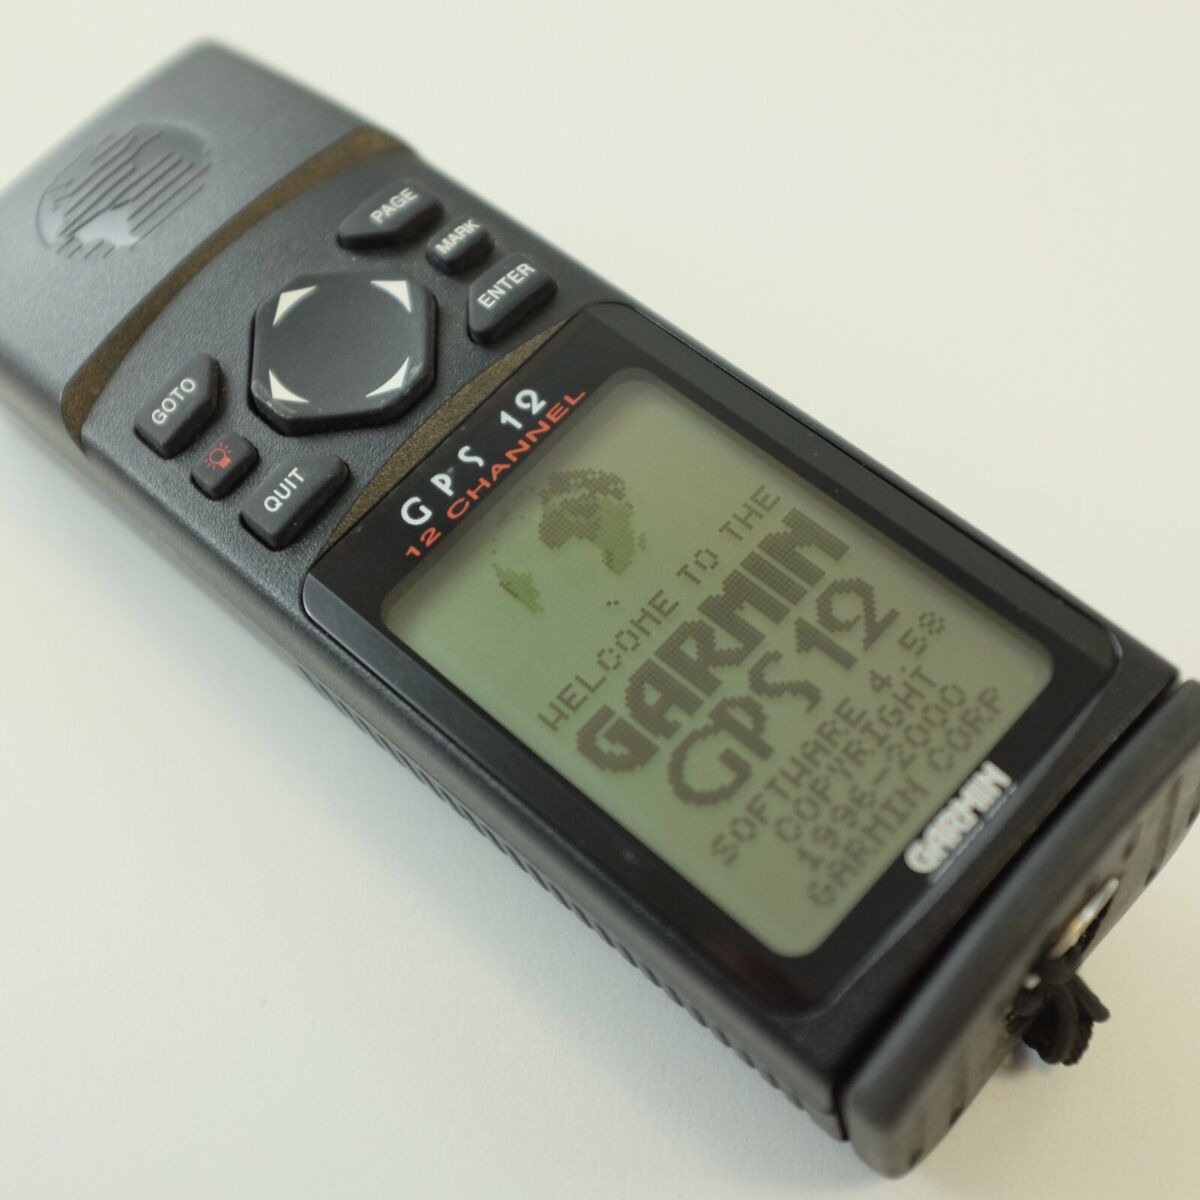 ignorere psykologi Rosefarve GARMIN GPS 12 Channel Portable Handheld Personal Navigator Hiking GPS12 |  eBay